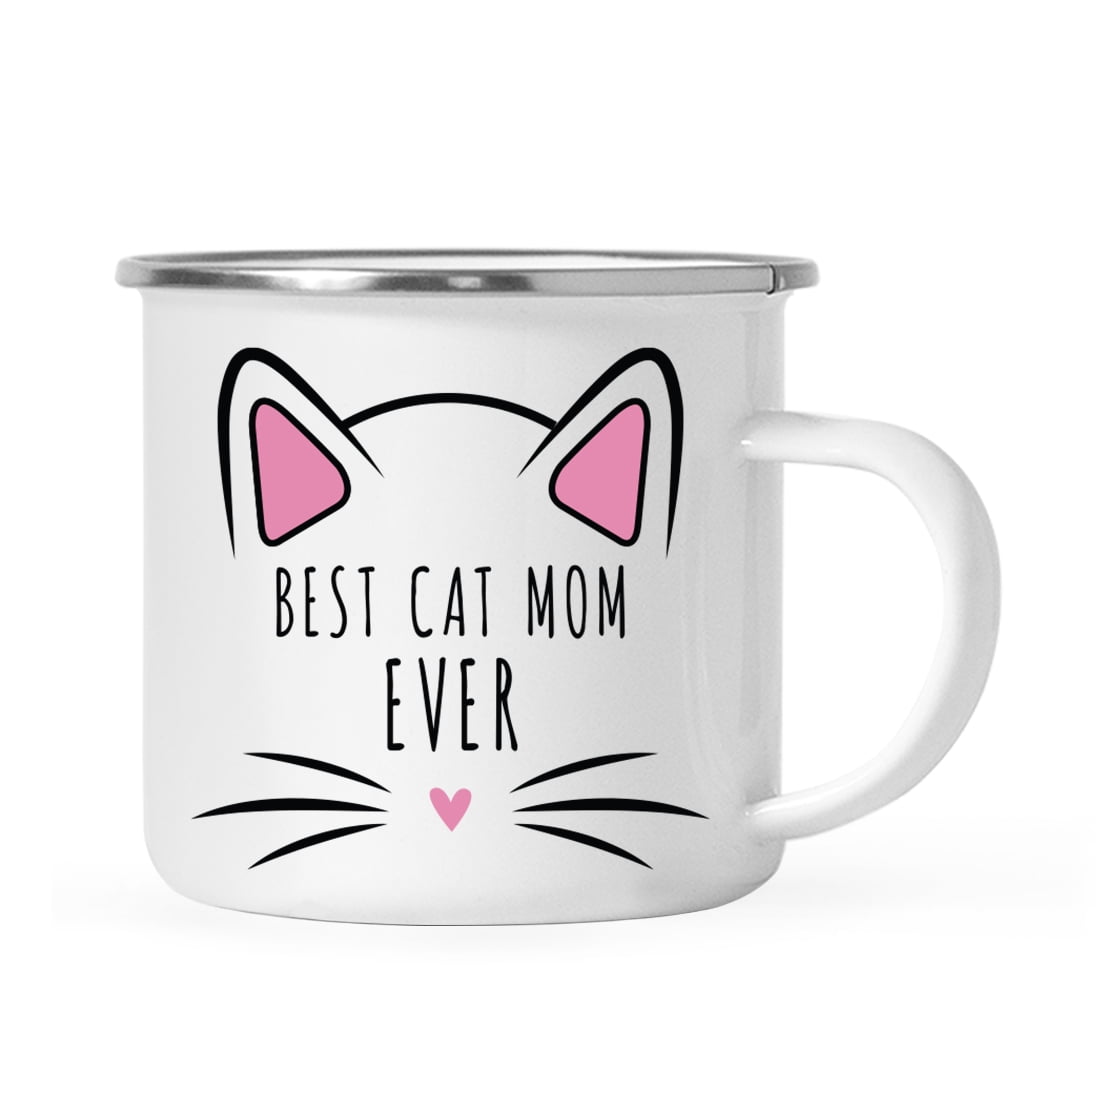 16 OZ Novelty Cat Cartoon Gift Mug Red Momugs TM Large White Ceramic Coffee Cup